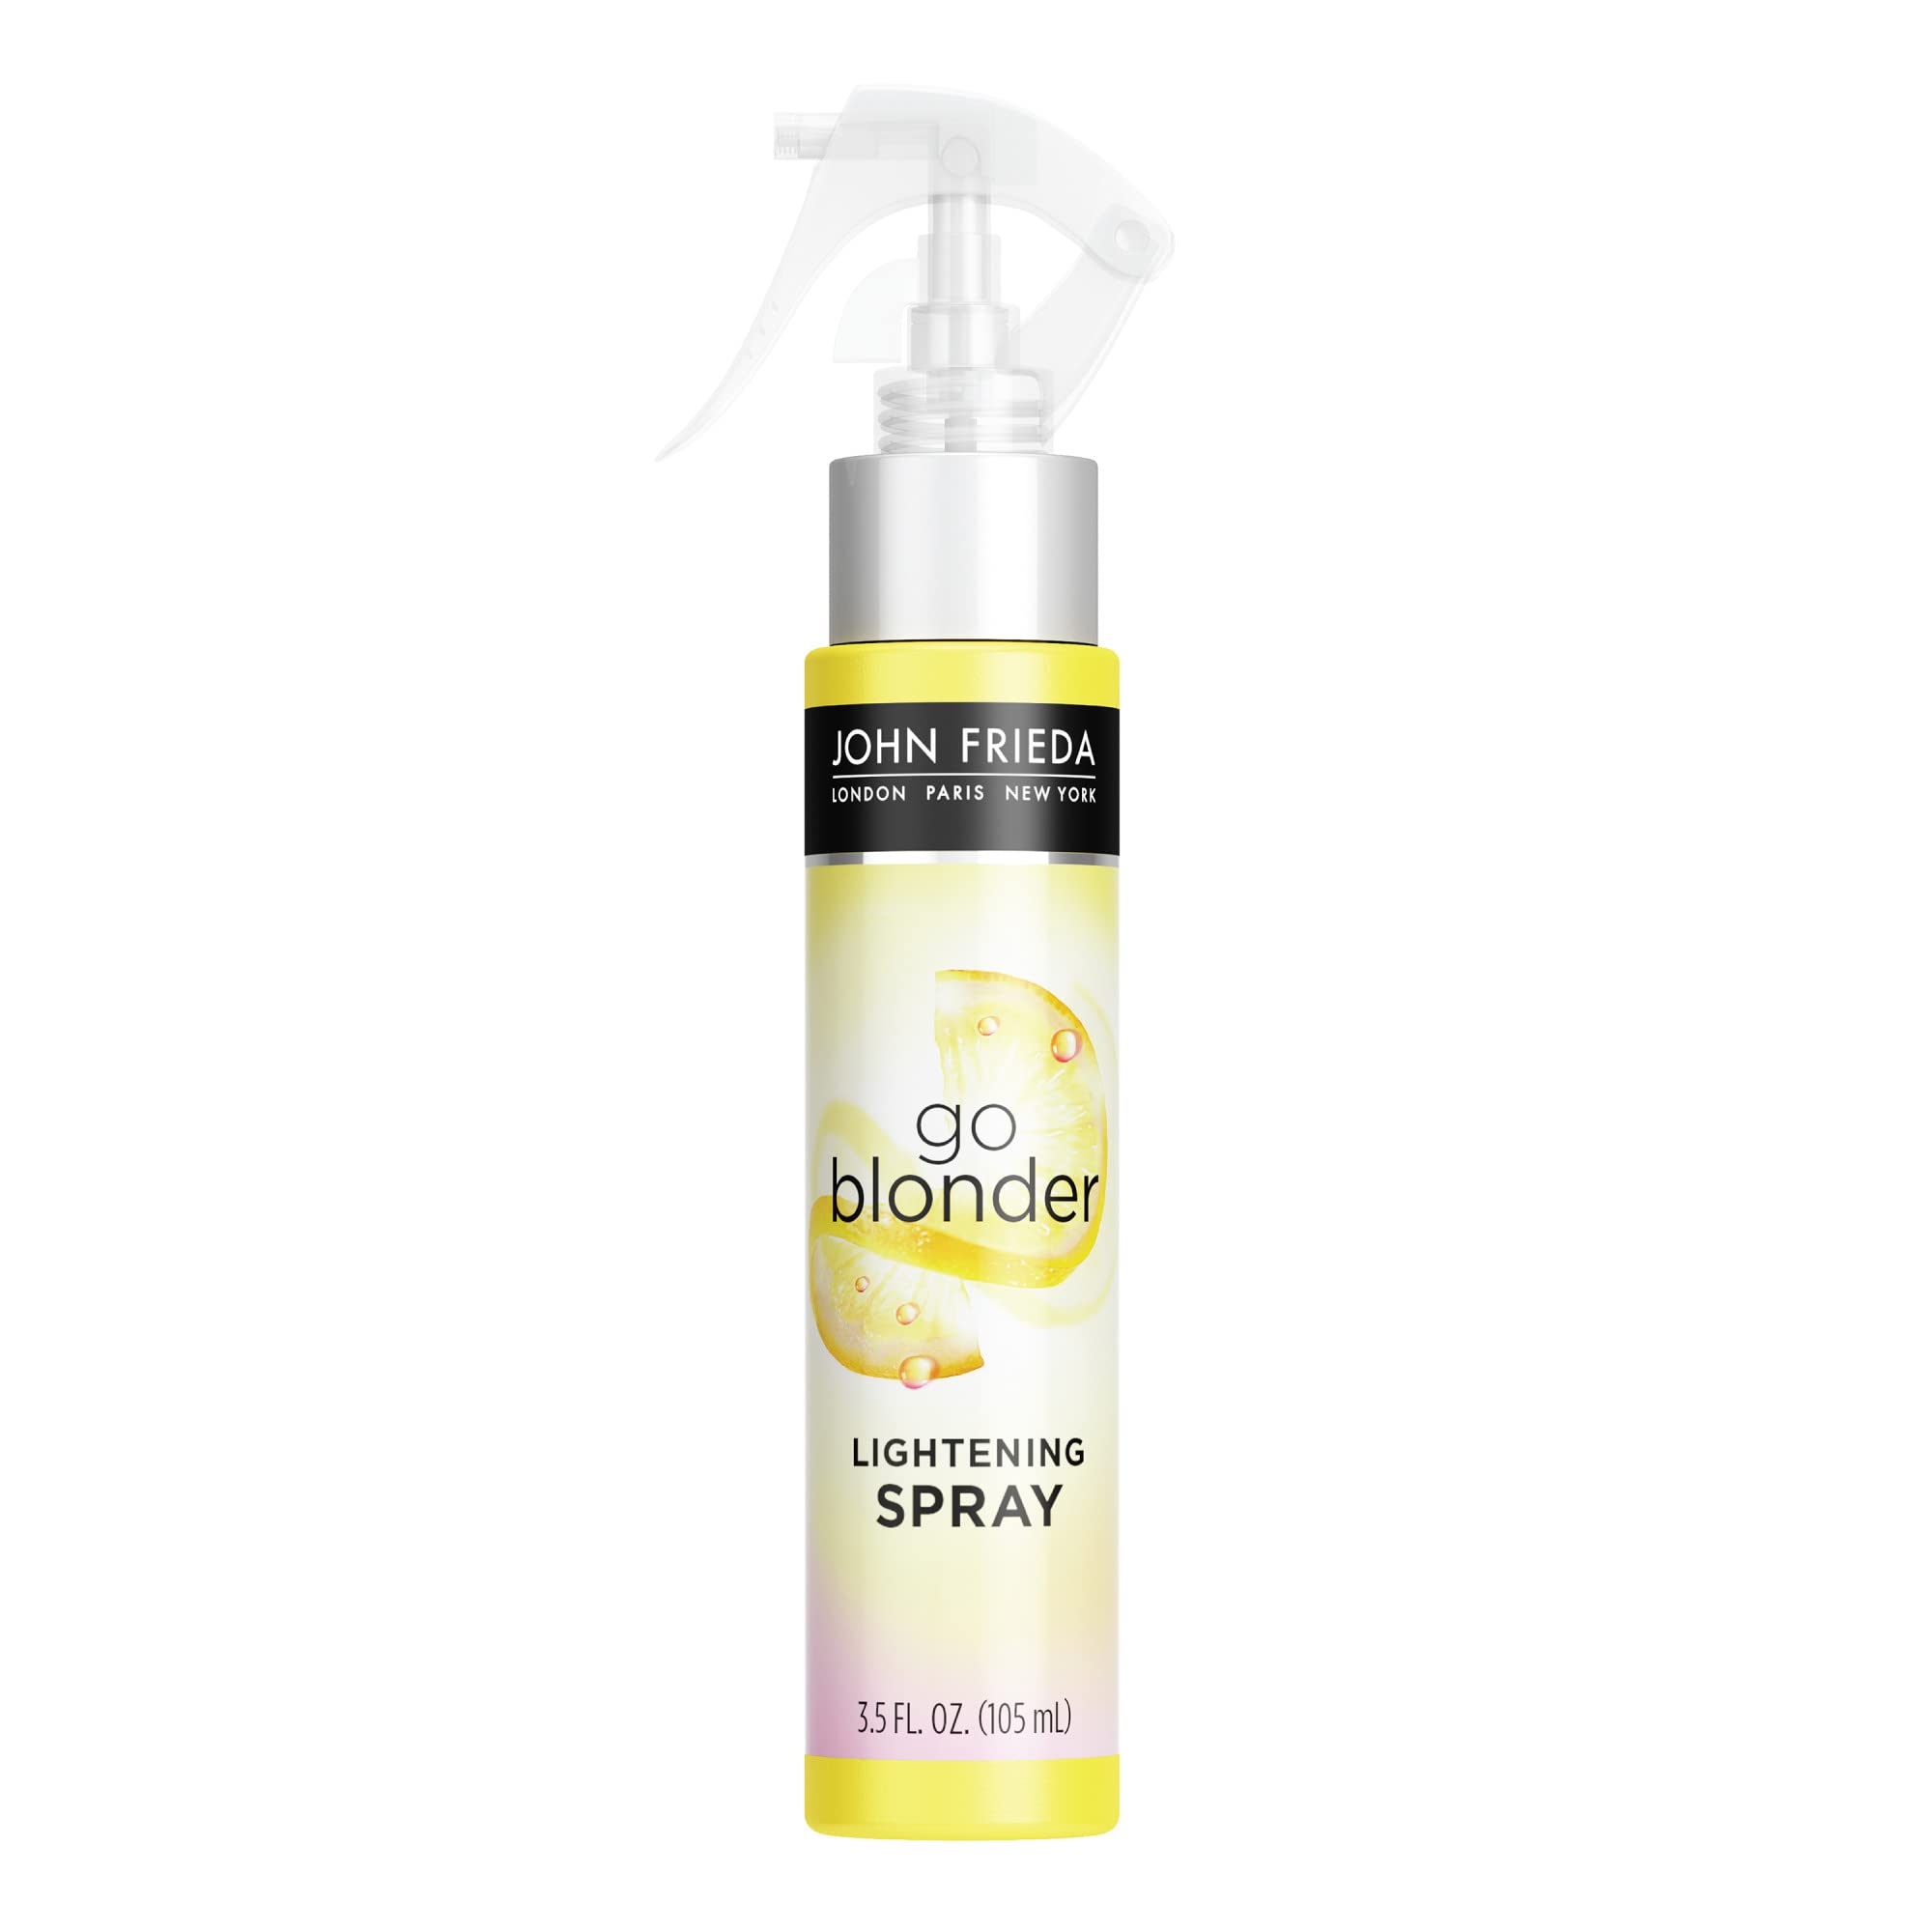 John Frieda Sheer Blonde Go Blonder Lightening Spray, Controlled Hair Lightener to Gradually Lighten Hair, with Citrus and Chamomile BlondMend Technology, 3.5 Ounce